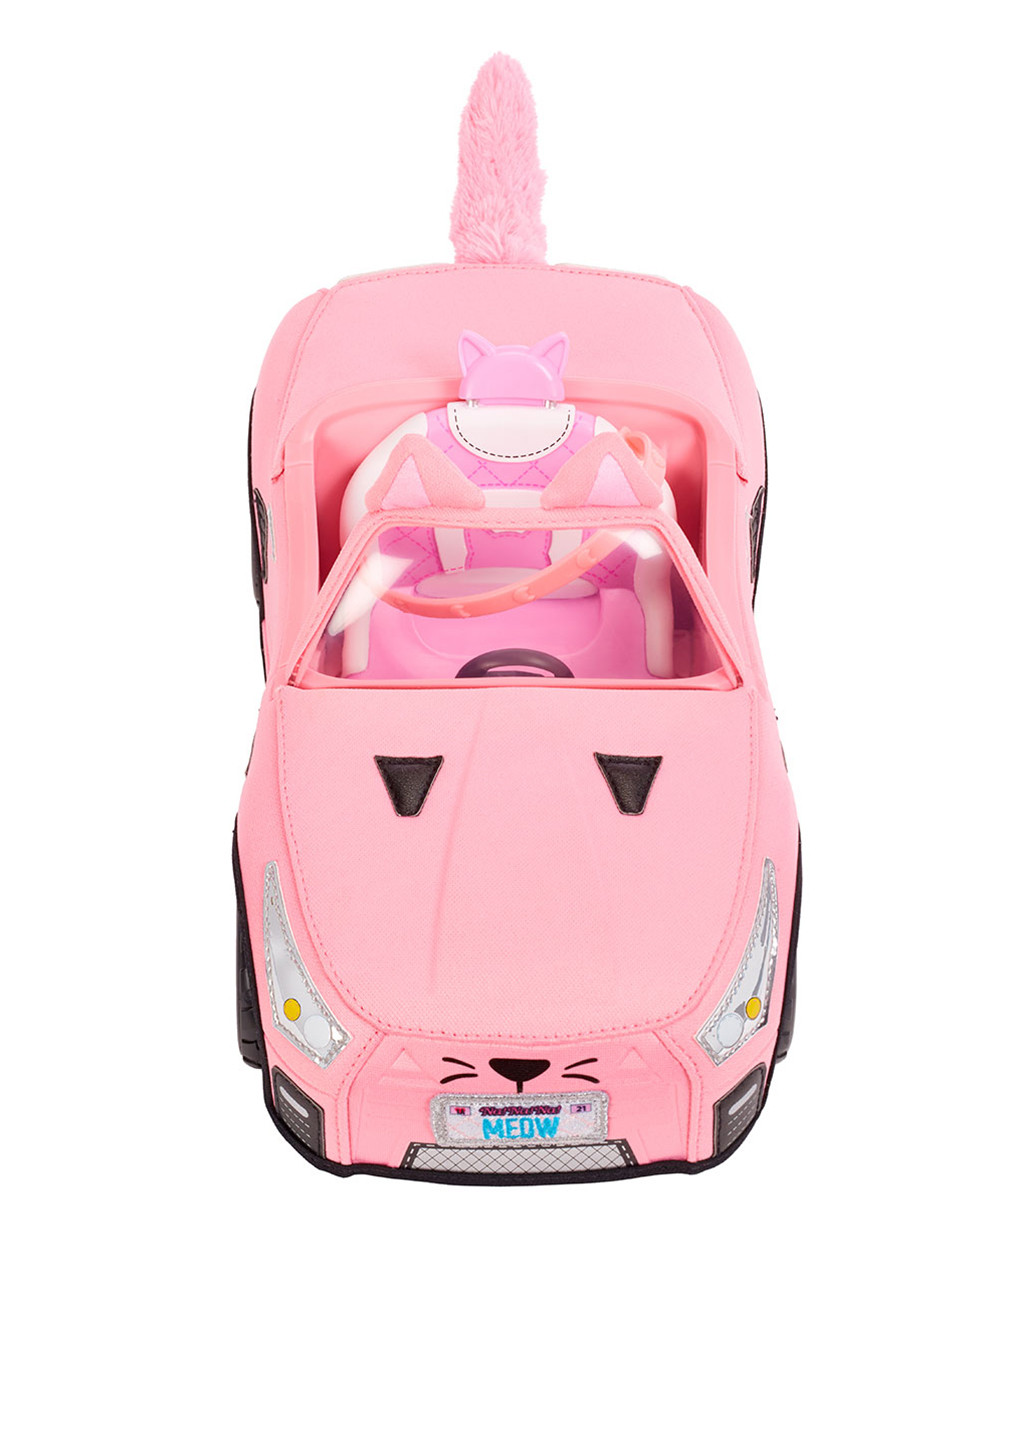 Машинка для куклы - Кэтмобиль Na! Na! Na! Surprise (215118101)